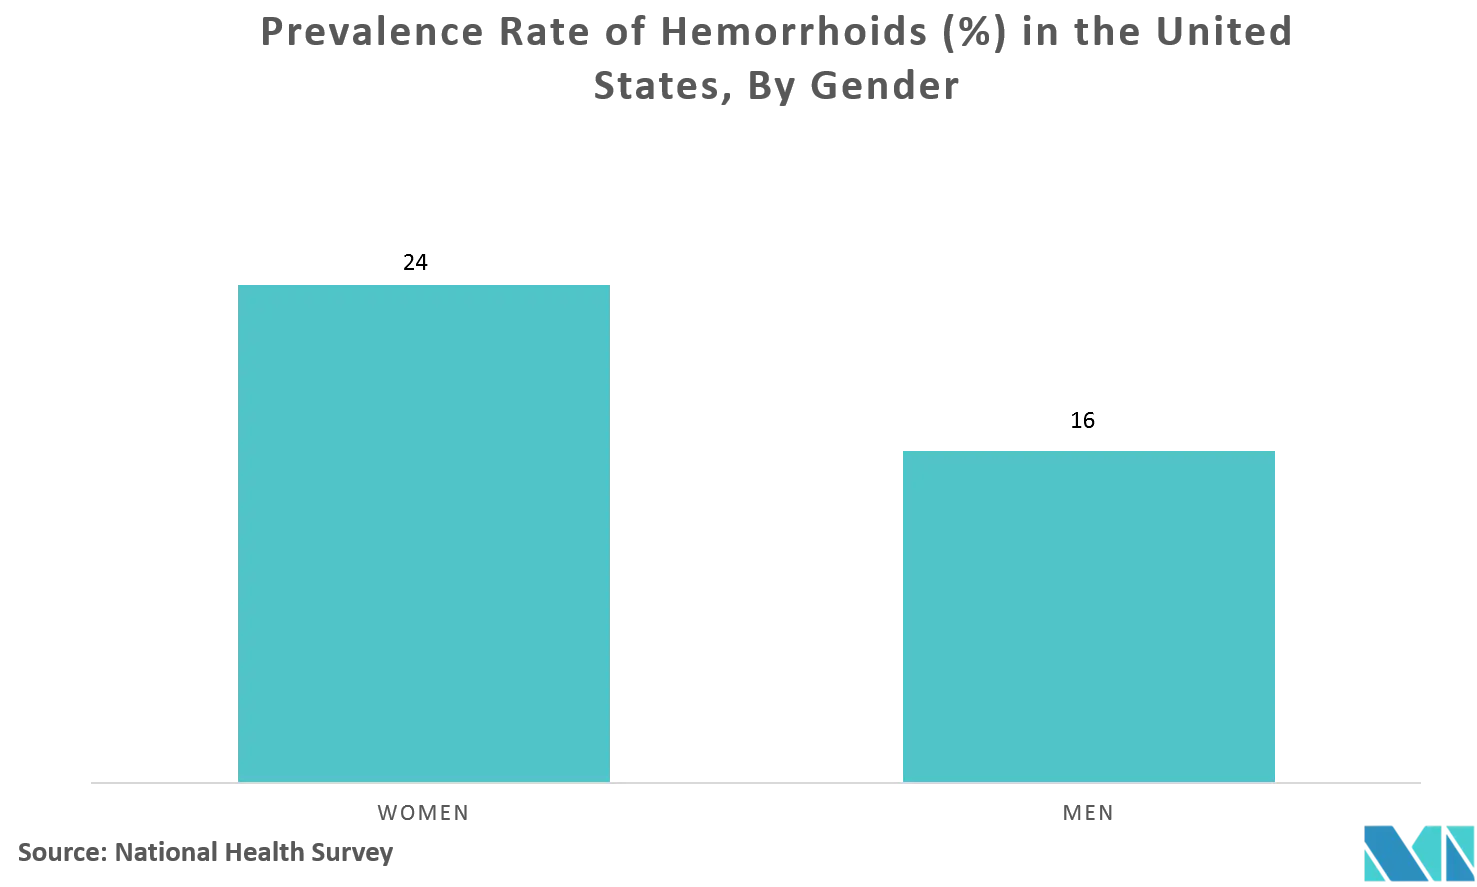 Hemorrhoid Treatment Devices Market Key Trends